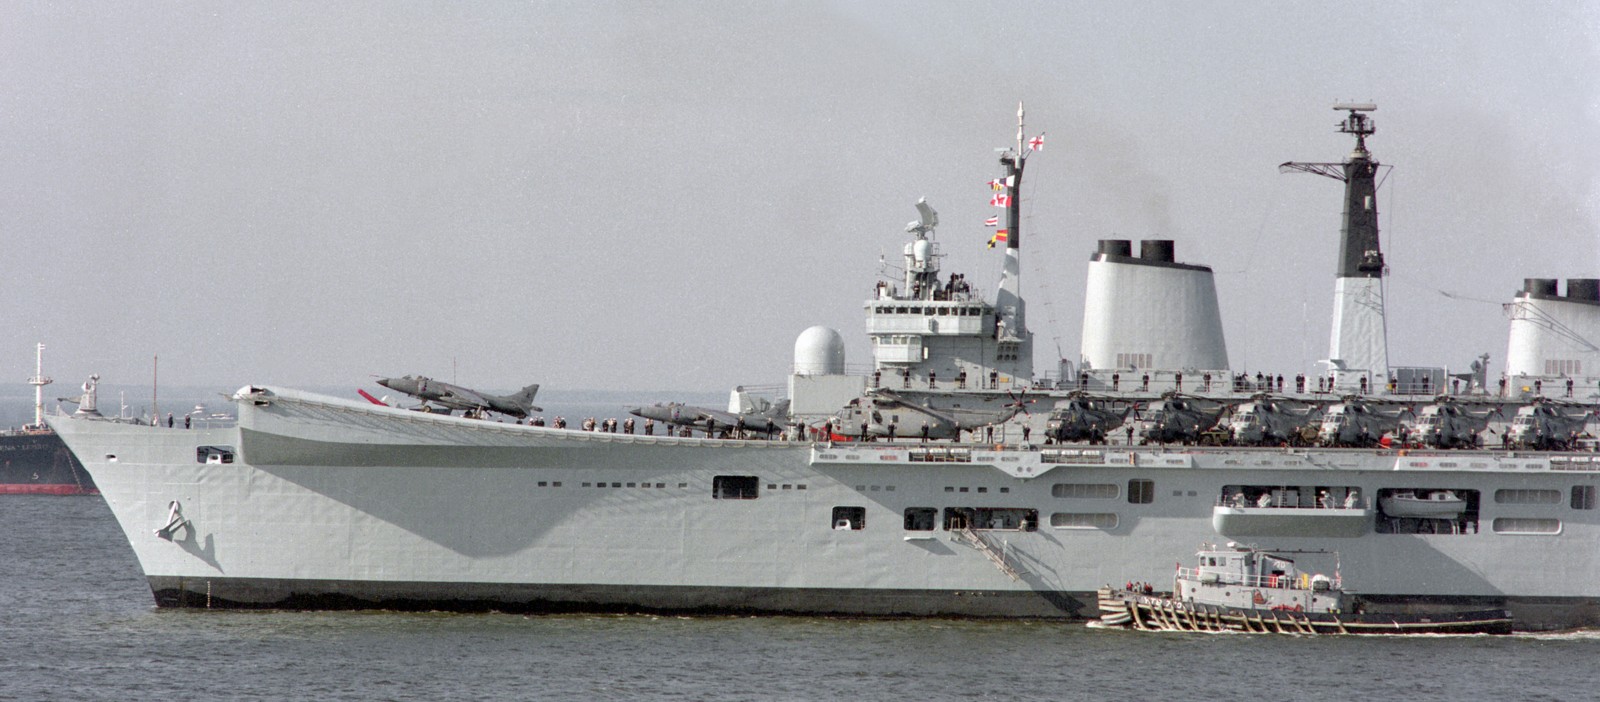 r-05 hms invincible class aircraft carrier royal navy 17